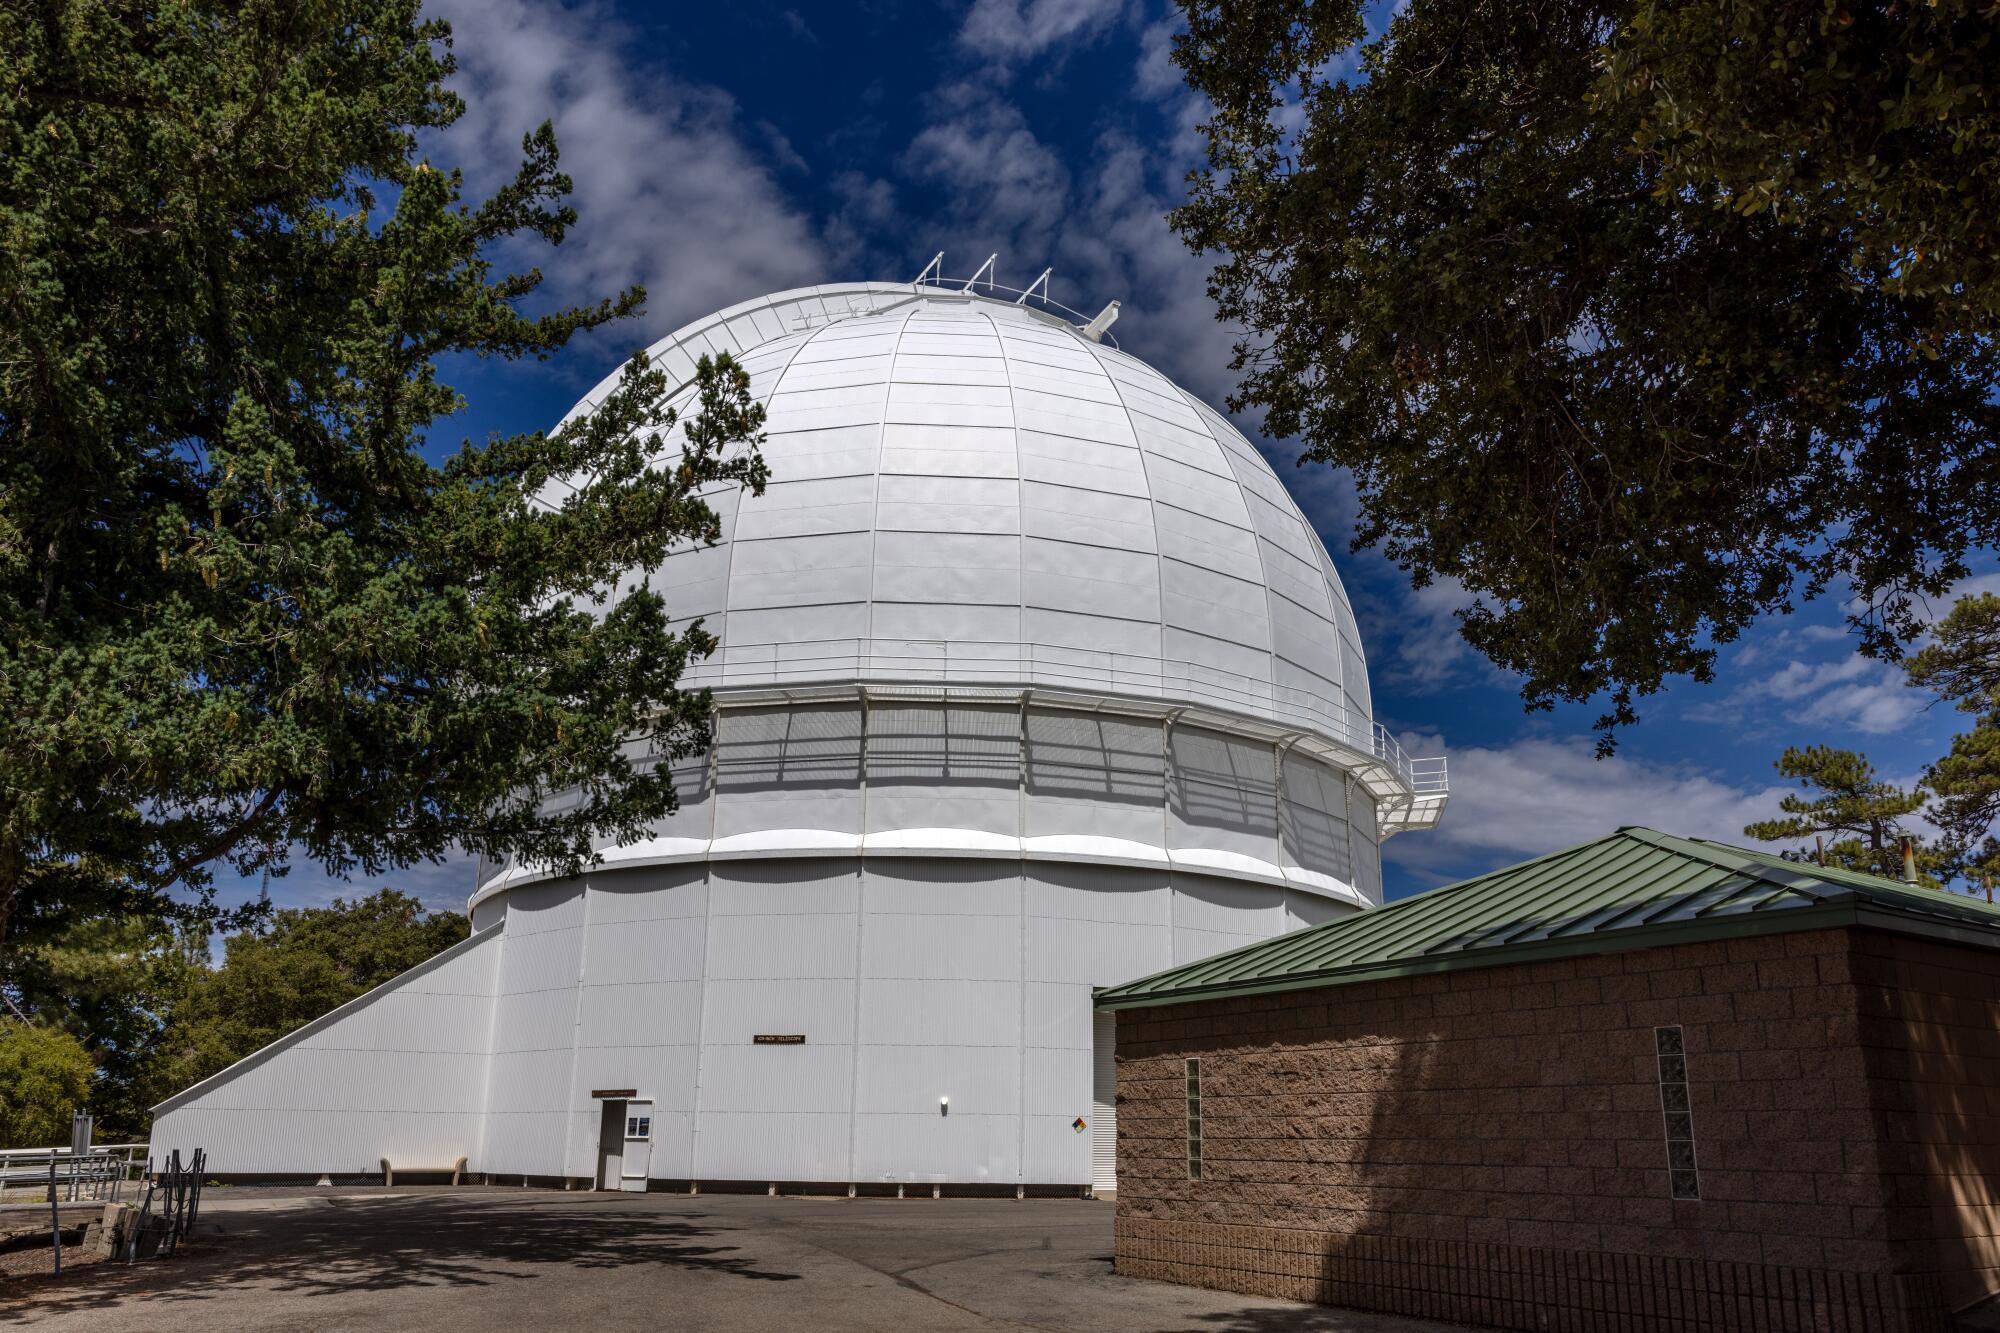 in mount wilson observatory telescope